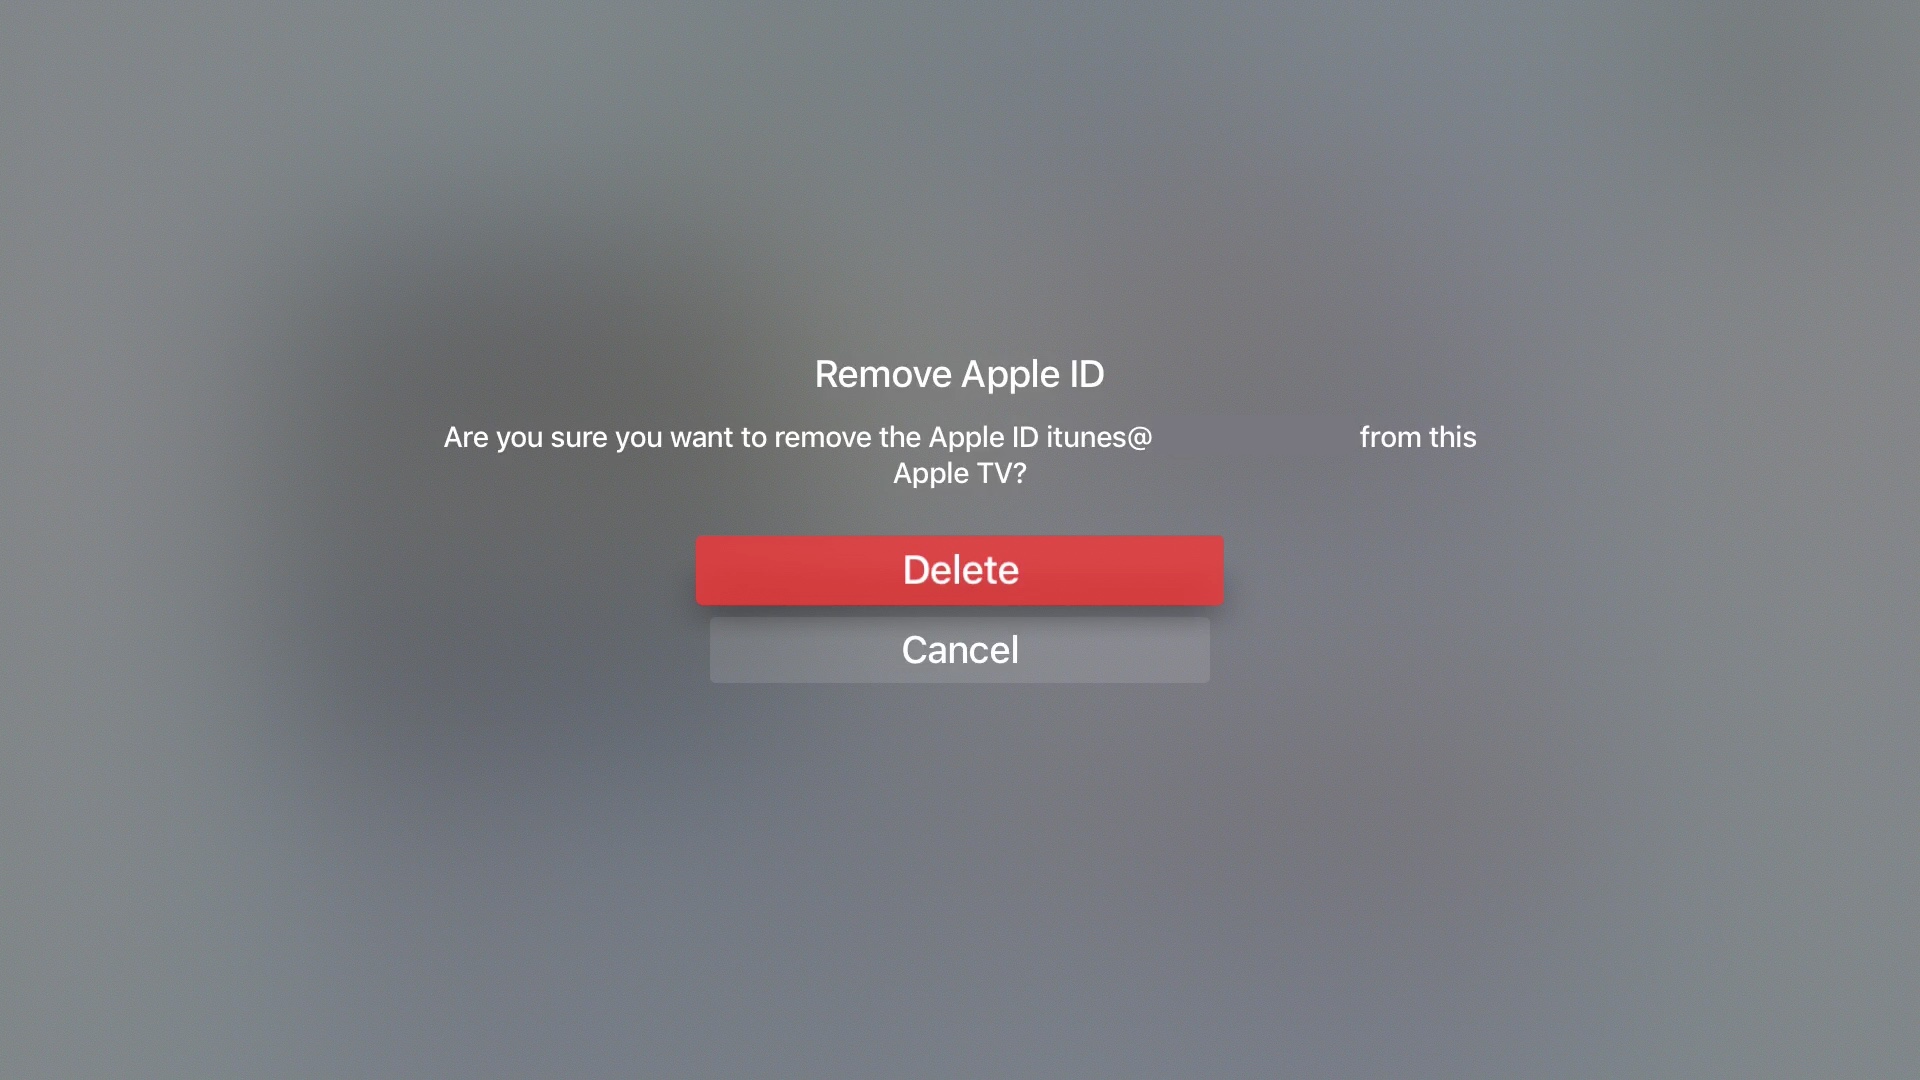 Apple TV Confirm Delete ID